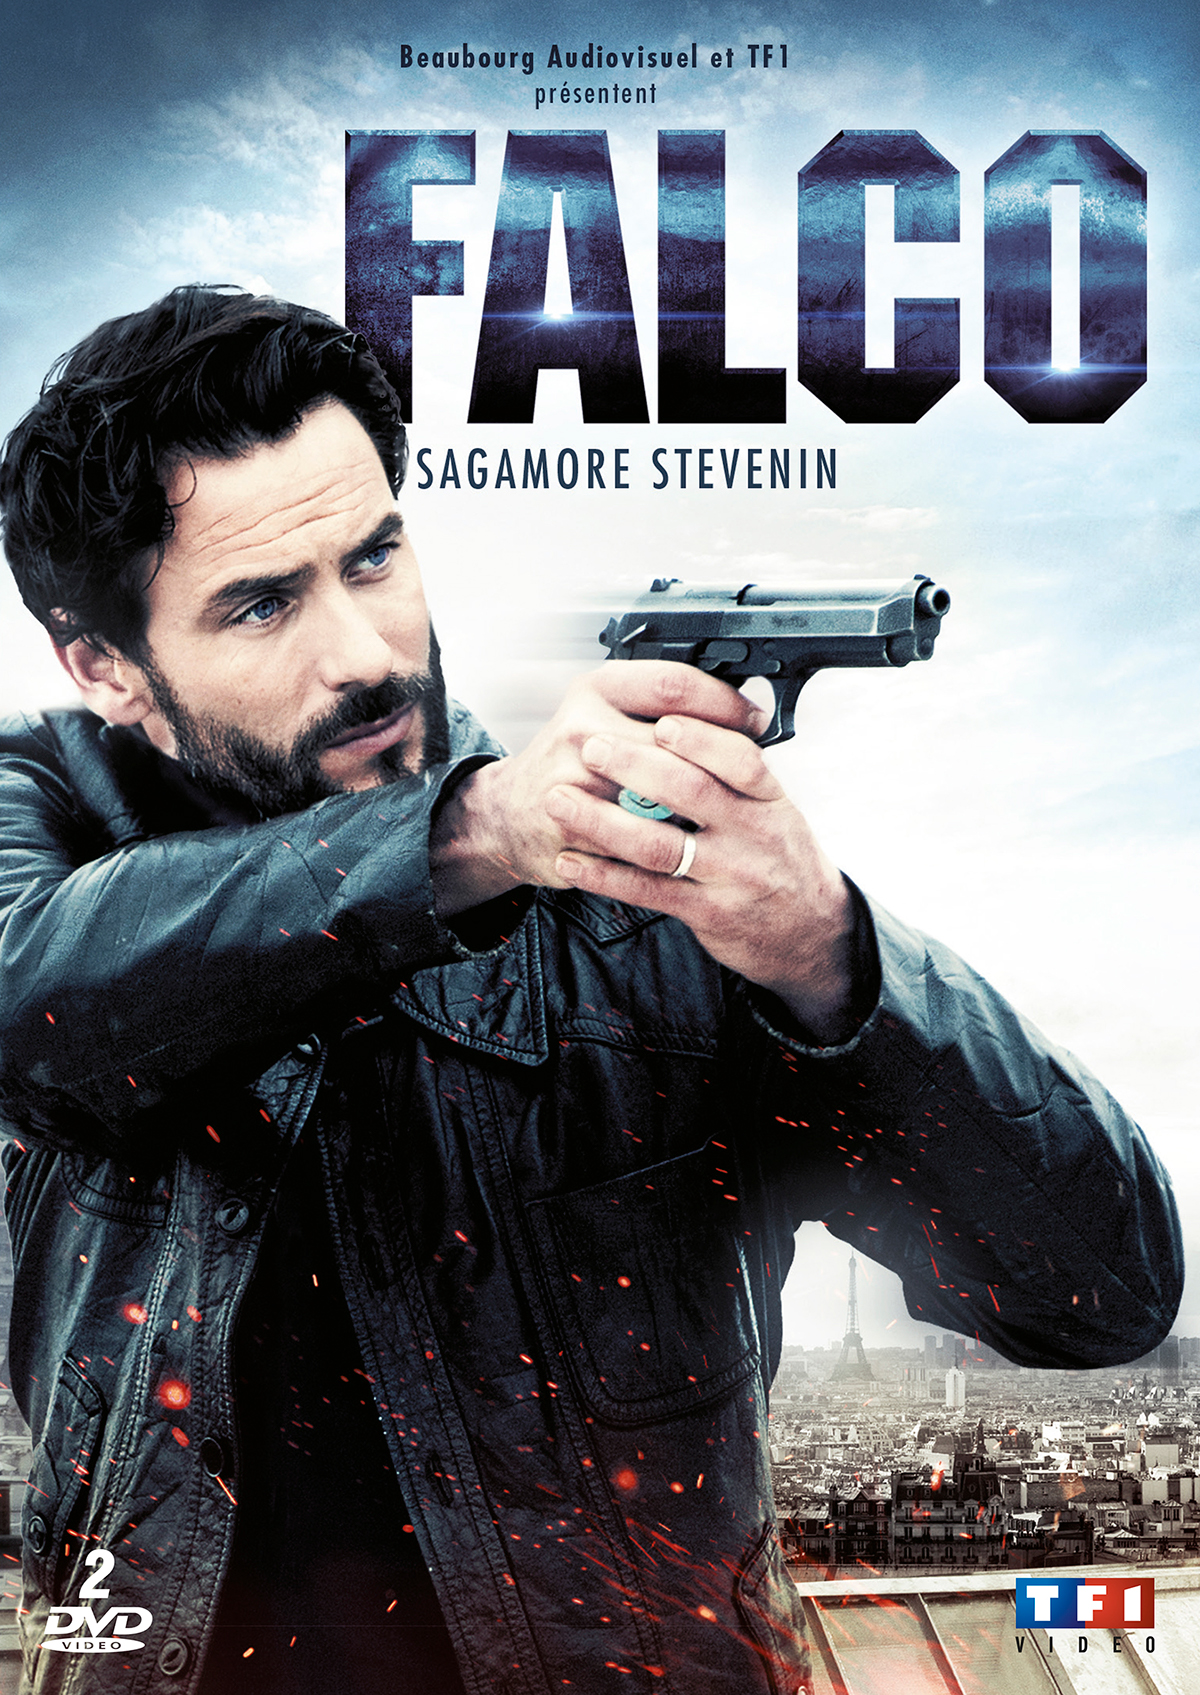 #Falco #TF1 #policier